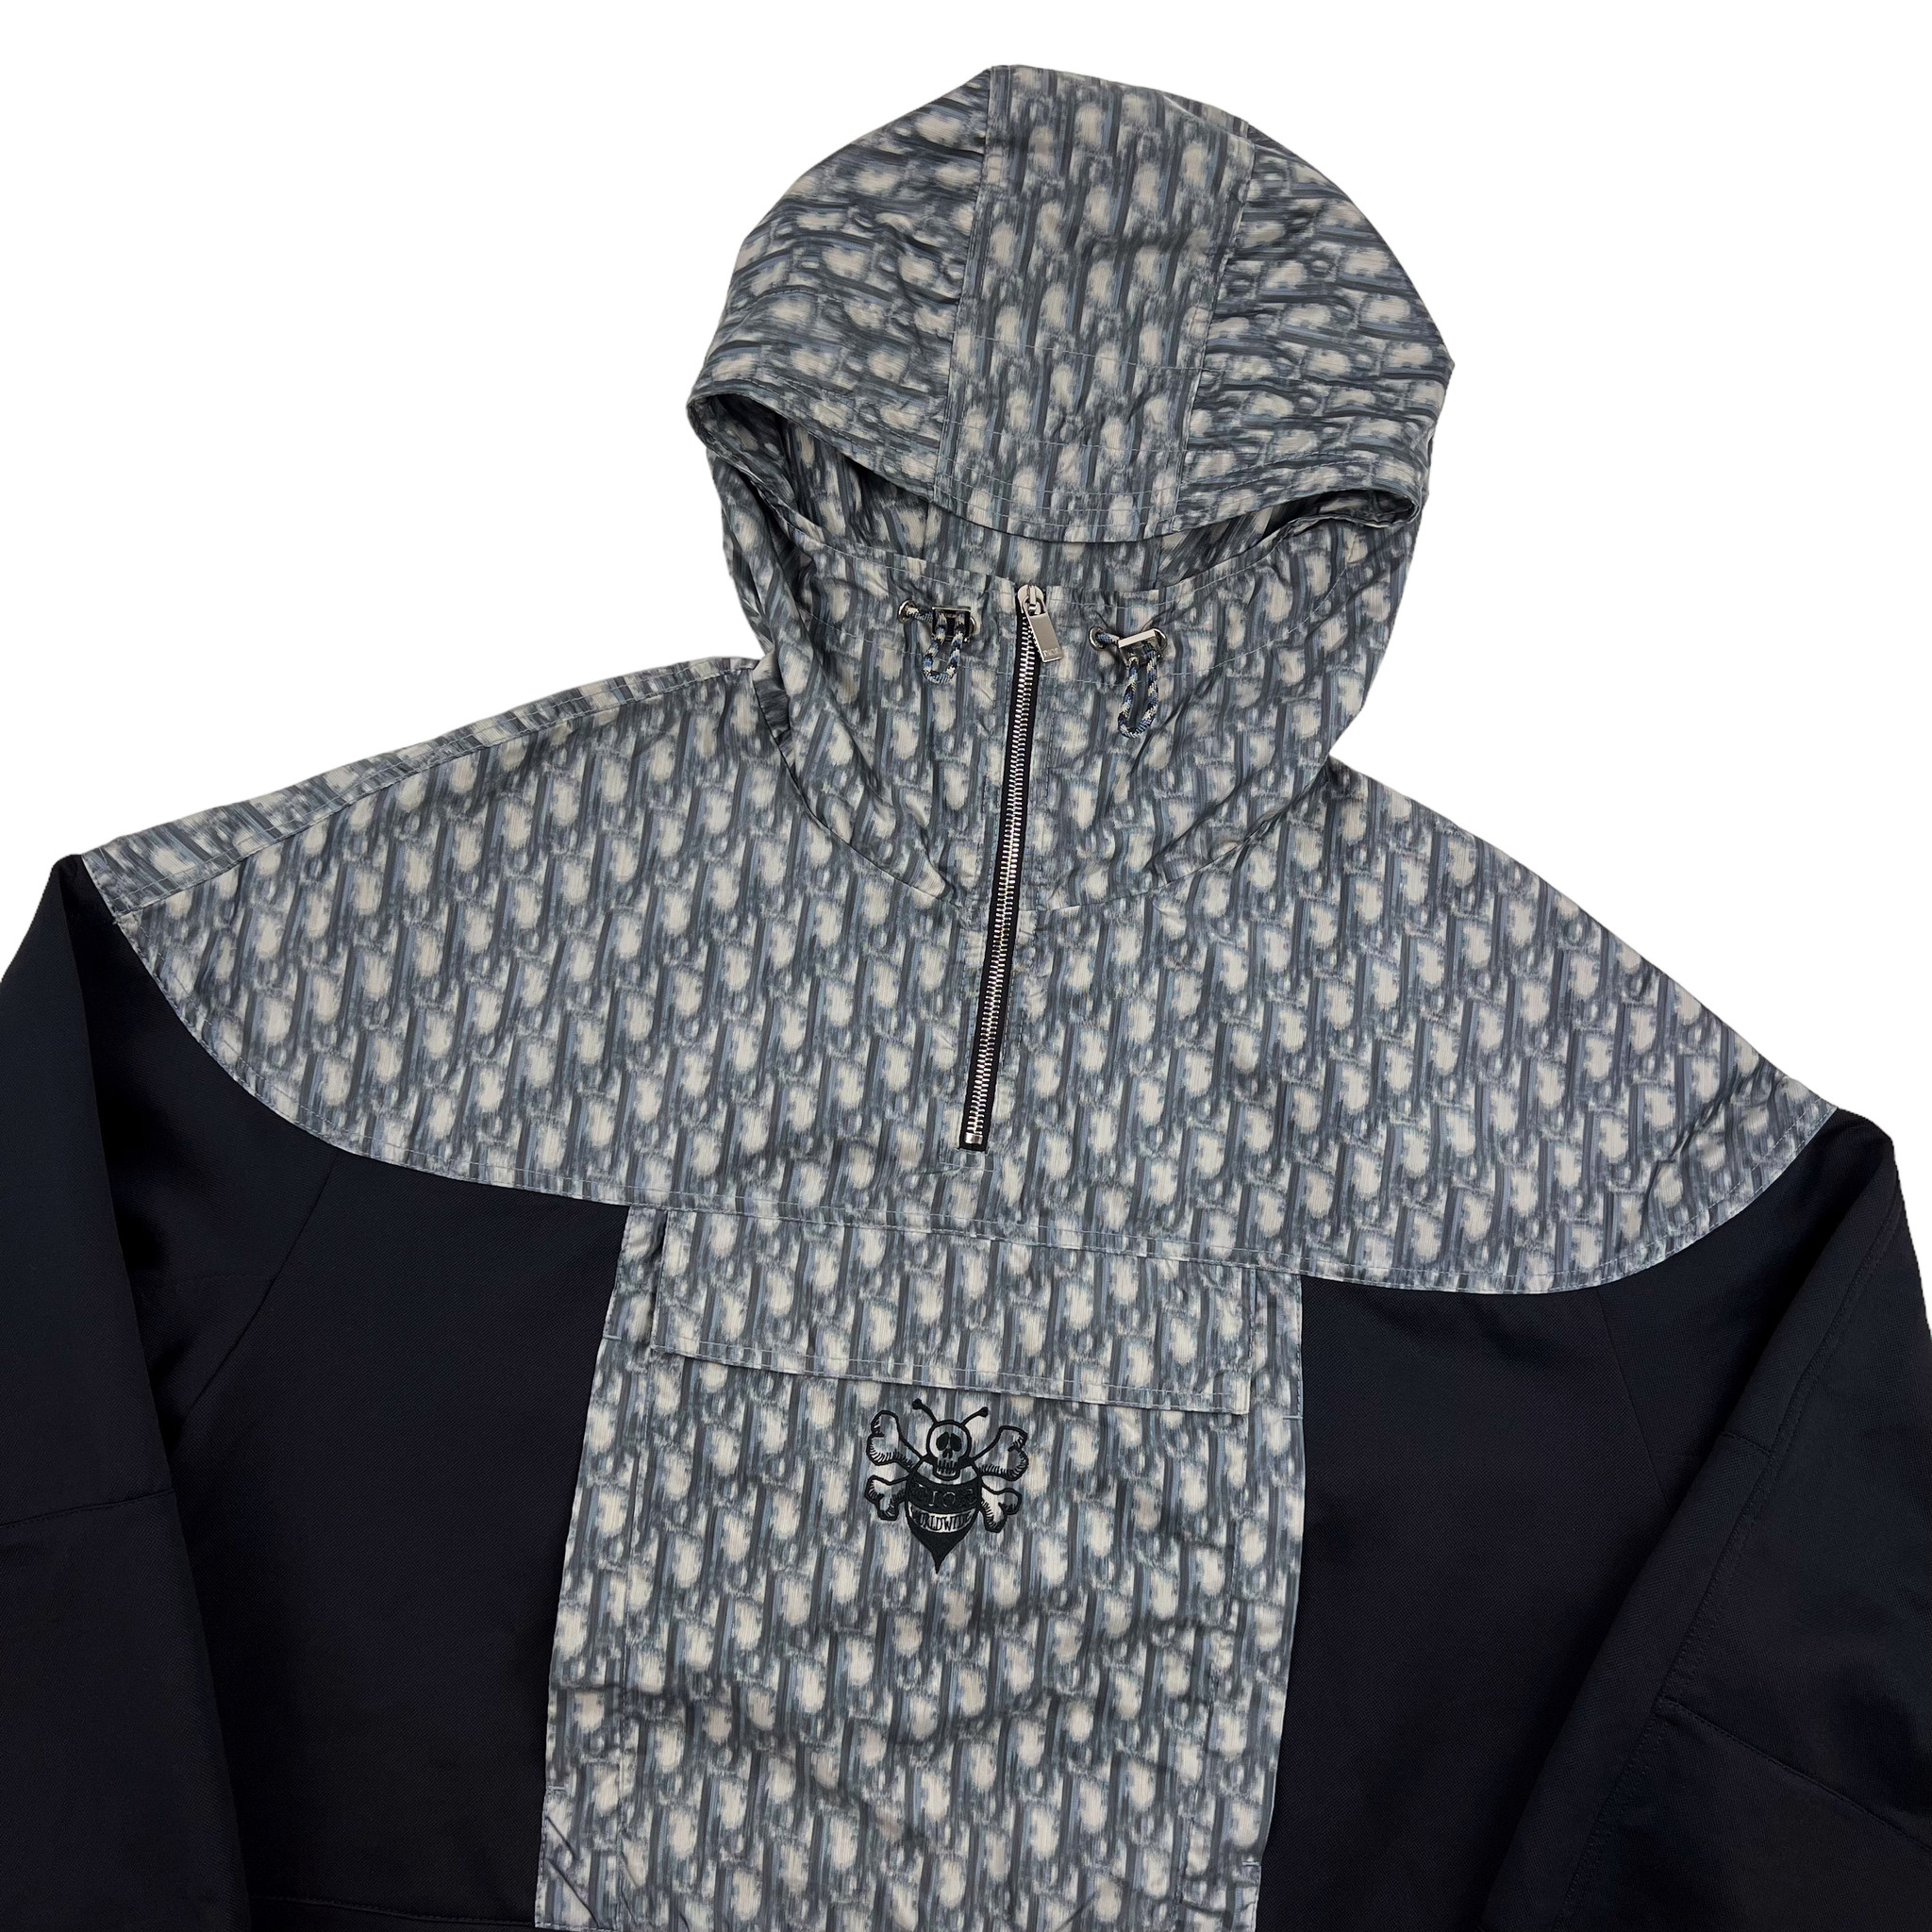 Dior x Shawn Stussy 20AW Multi Wool knit sweater 033M622AT167 Size XS  eBay